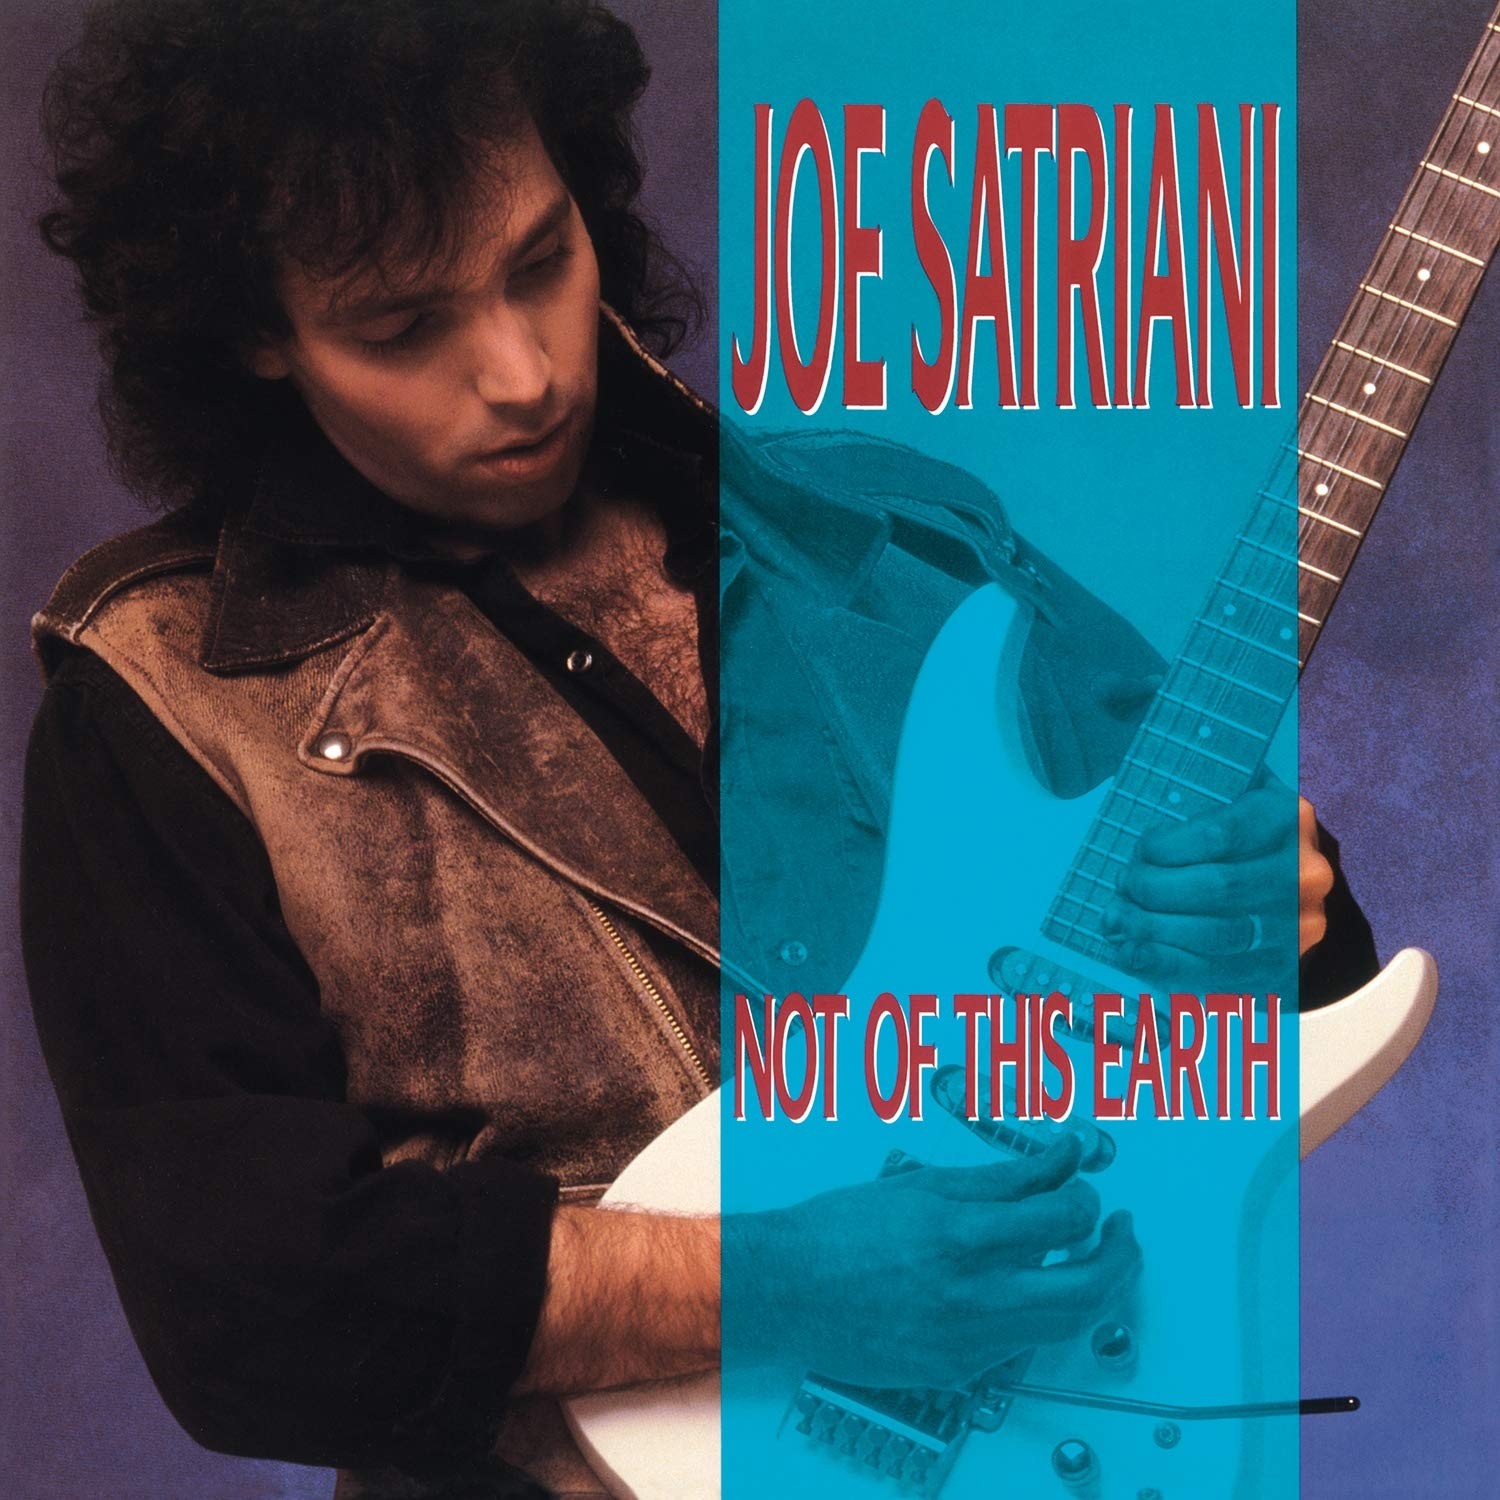 Joe Satriani - Not Of This Earth LP